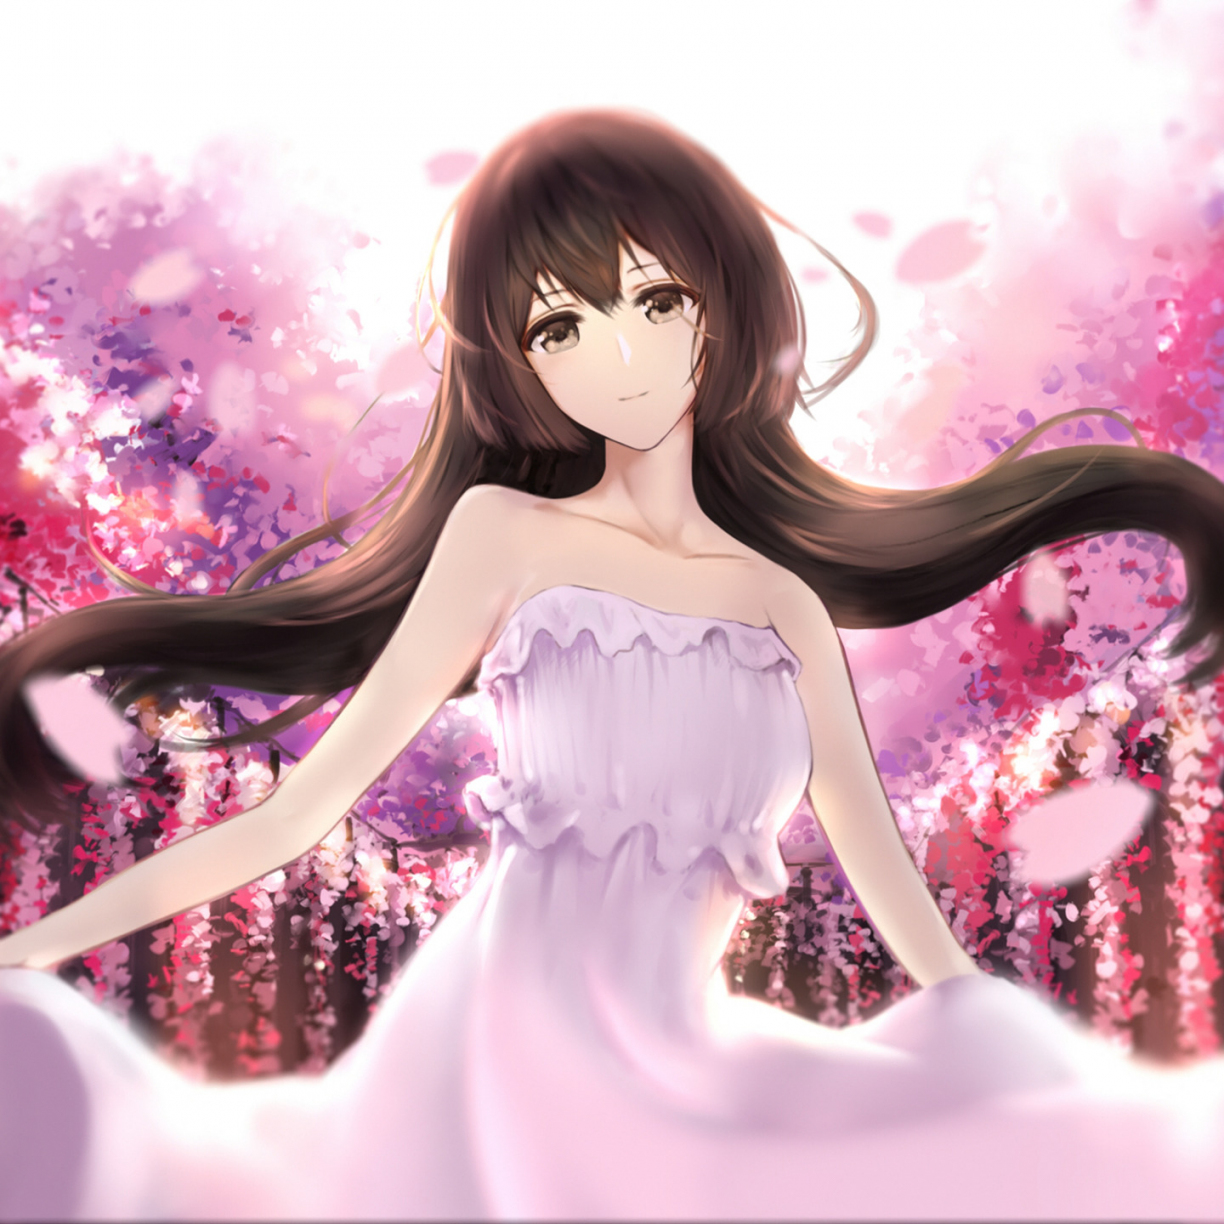 Dance, cherry blossom, pink dress, anime girl, 1224x1224 wallpaper.